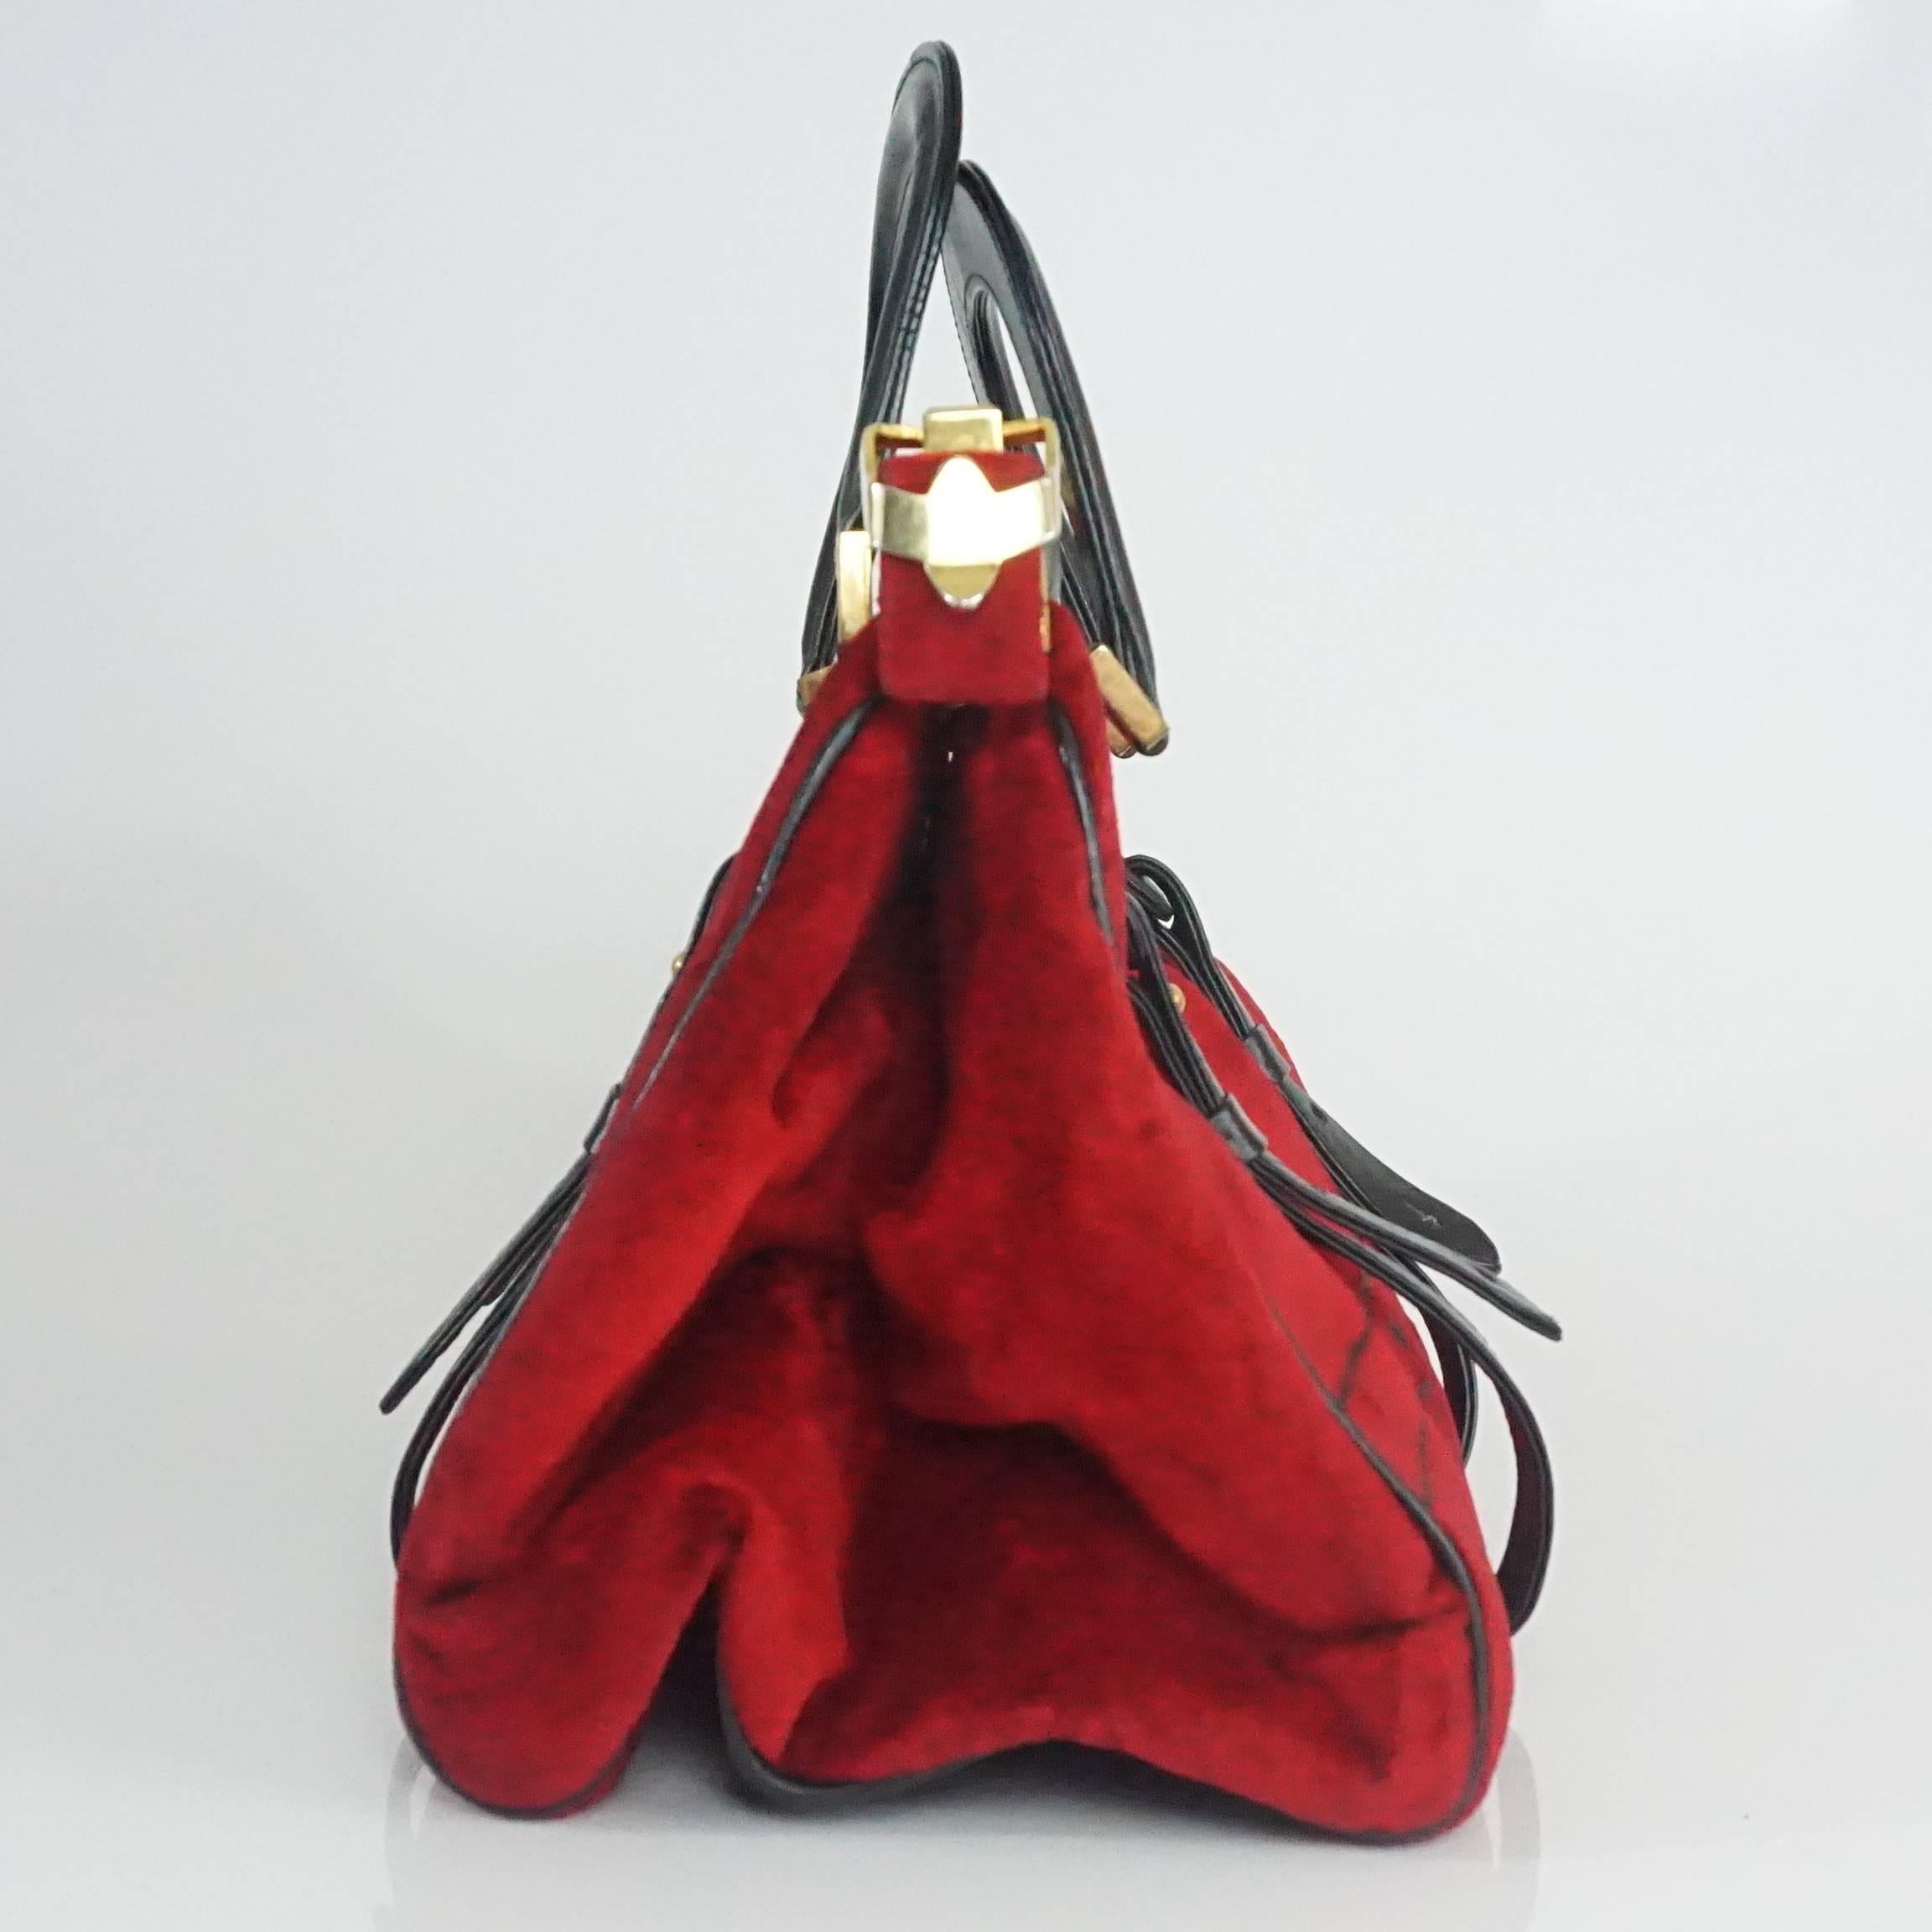 Cesare Piccini Vintage Red Velvet Handbag with Black Leather Trim - 1960's. This vintage structured 